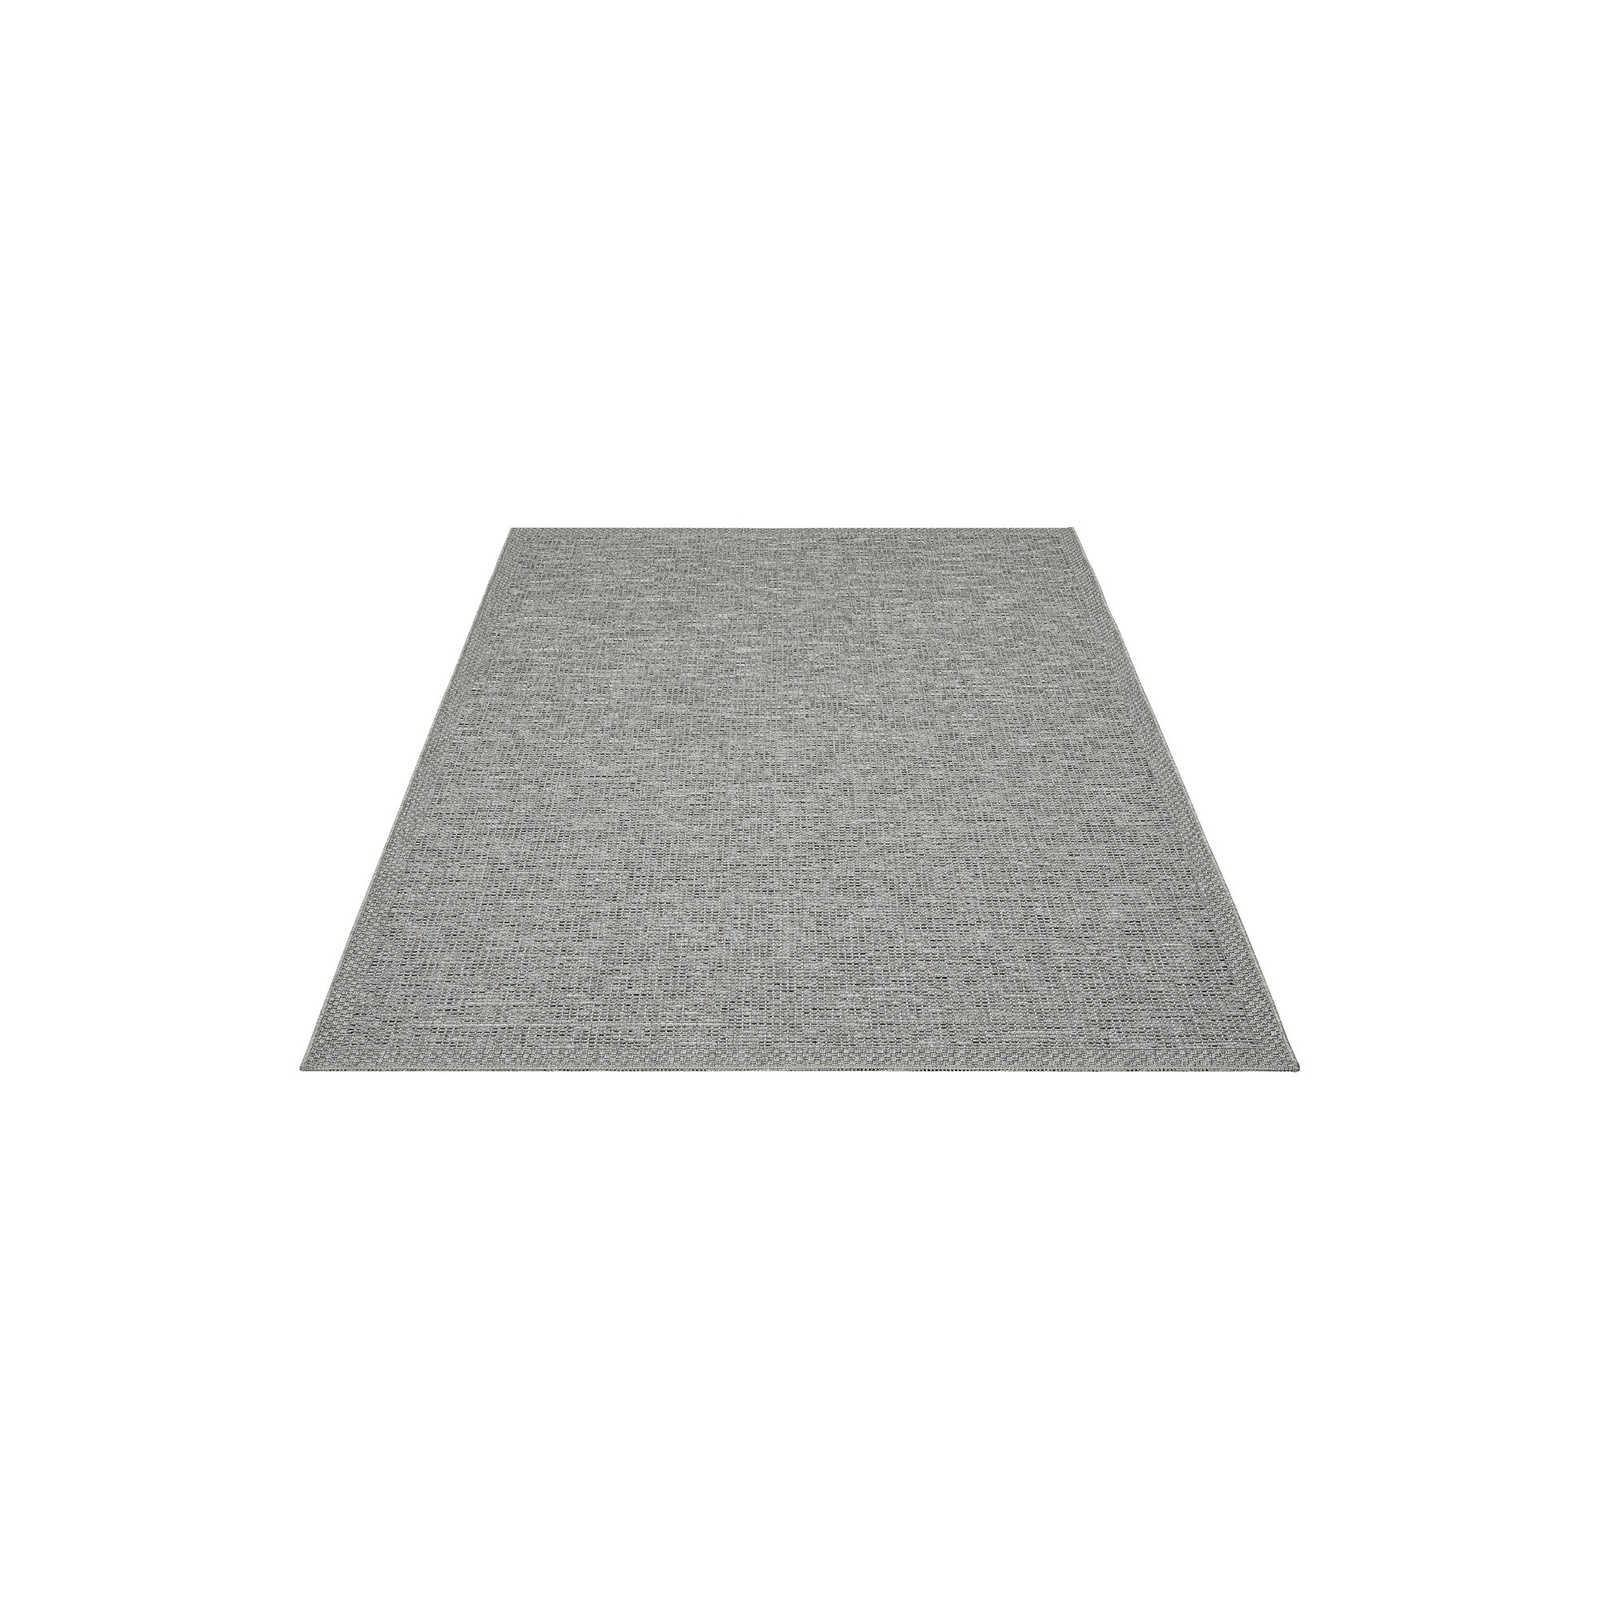 Simple Outdoor Rug in Grey - 150 x 80 cm
